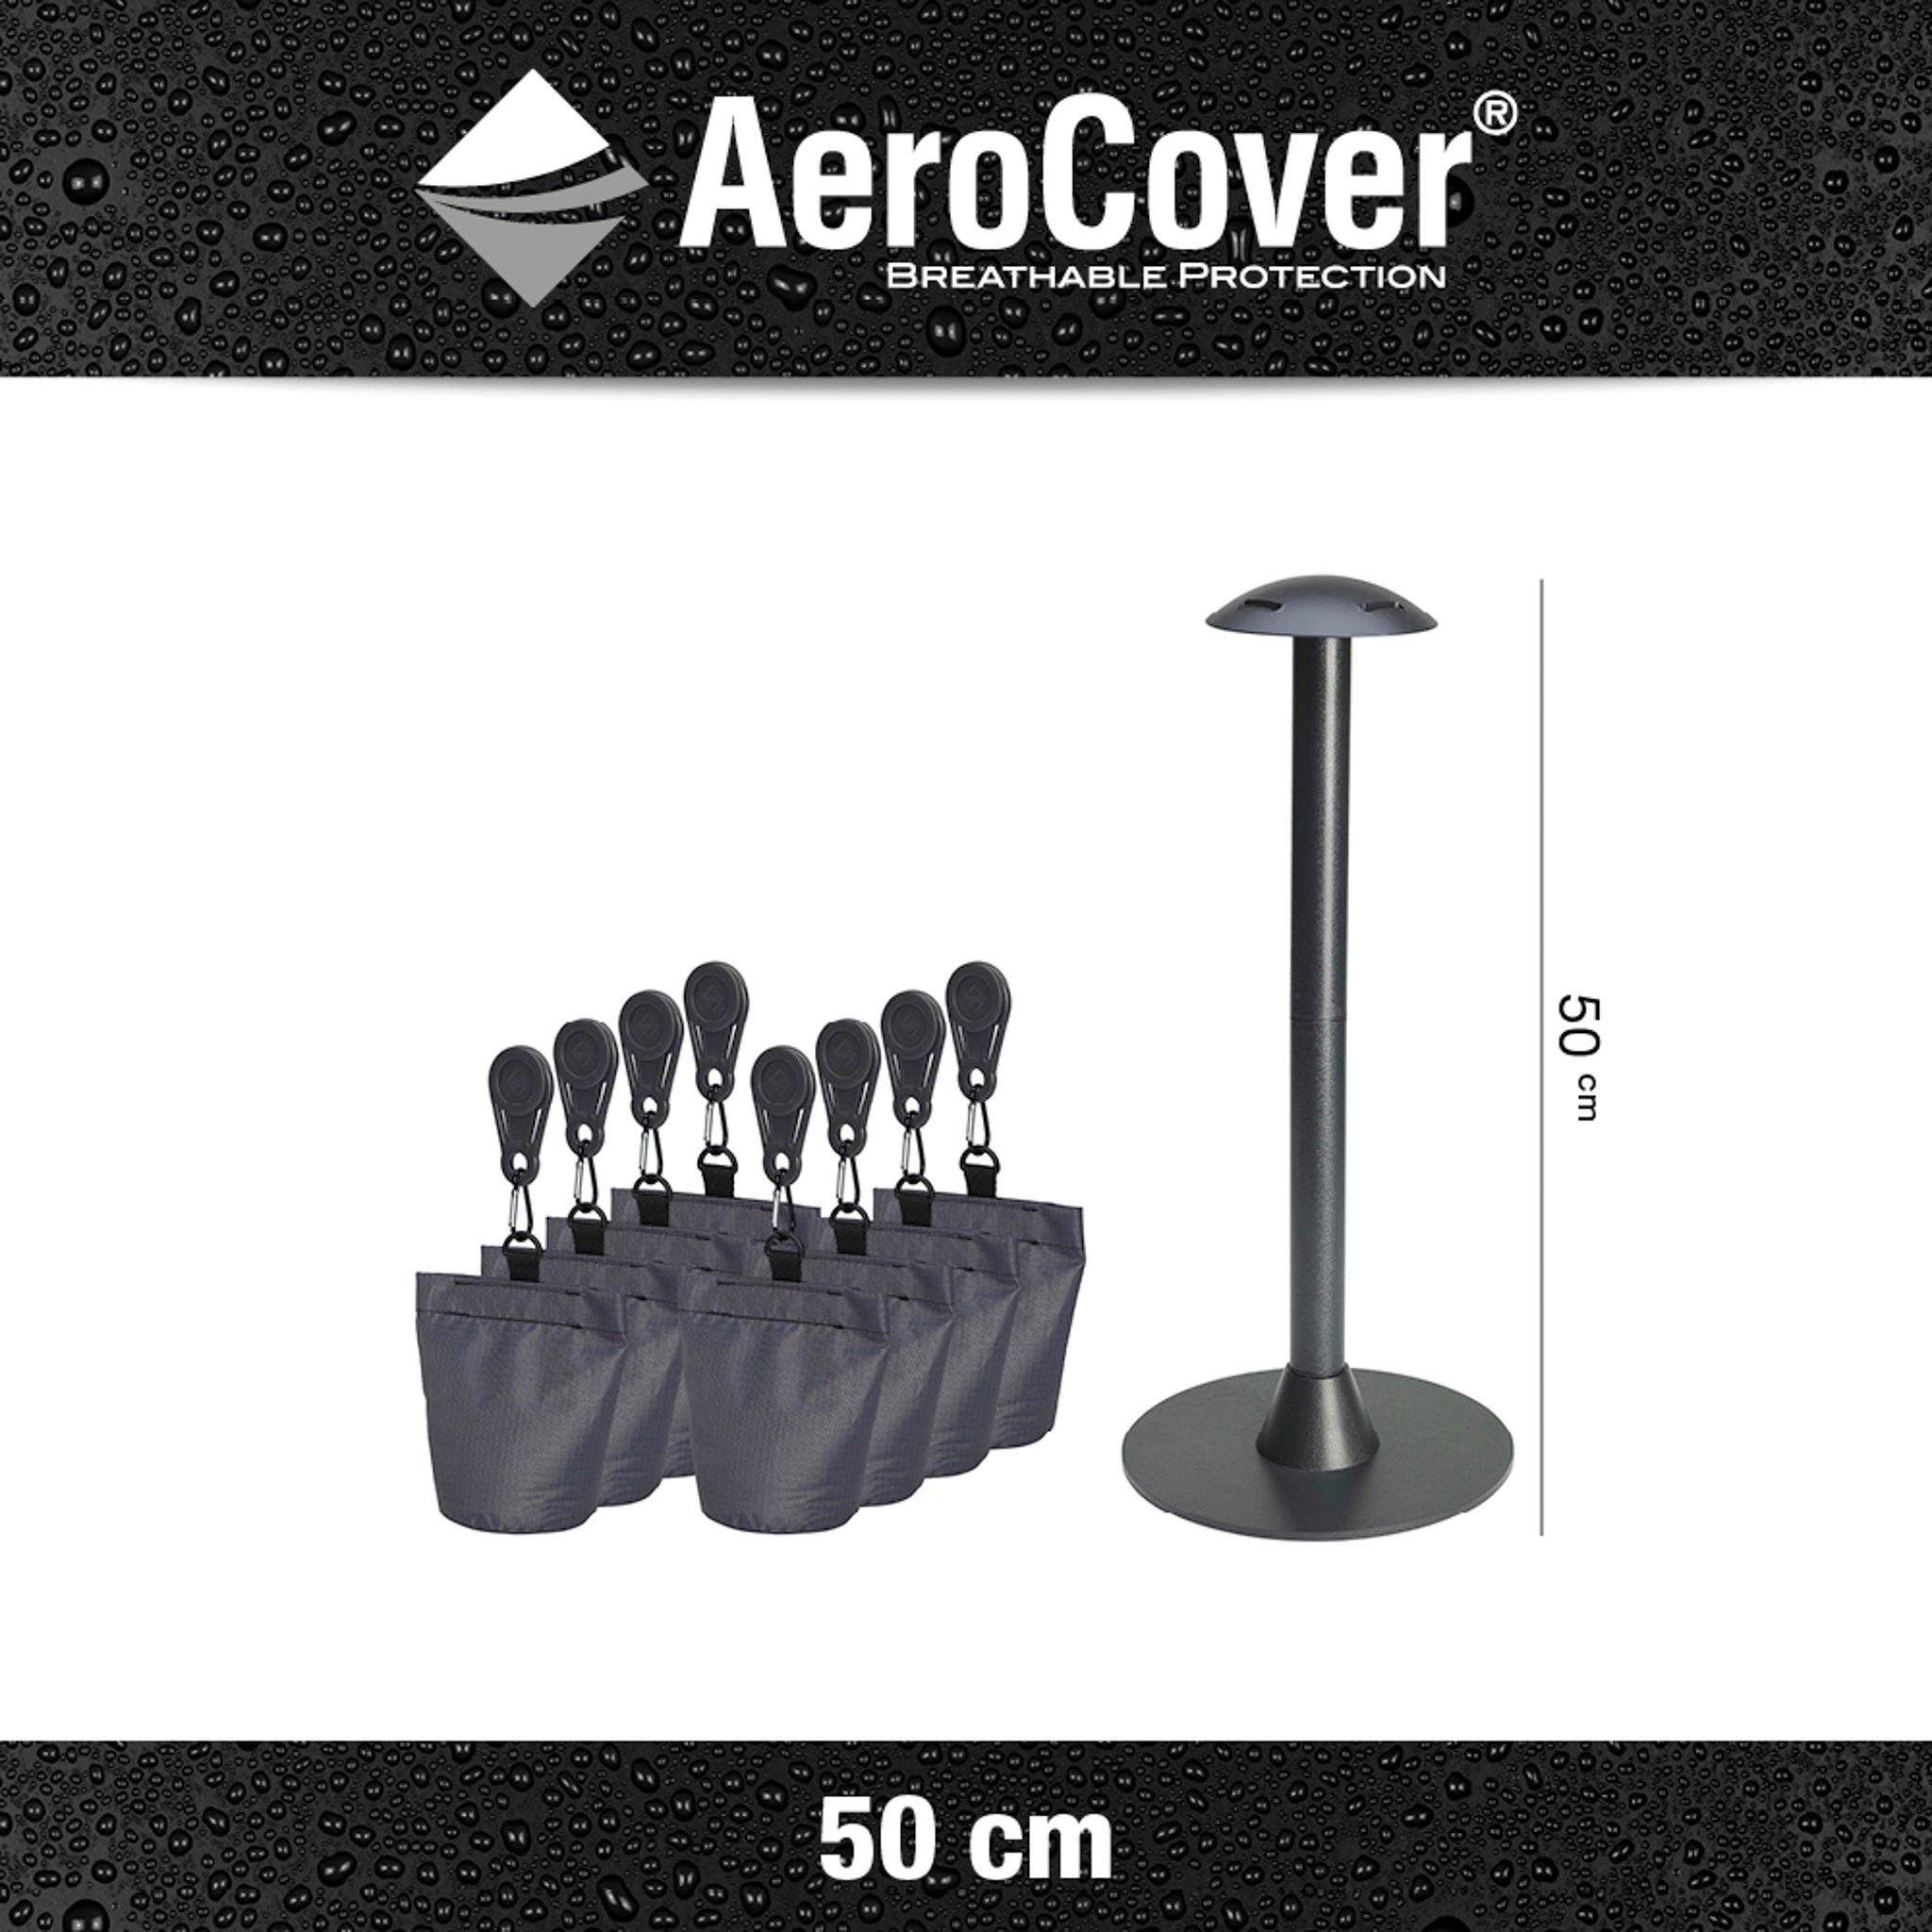 AeroCover - Support Pole Set - 24x10x20cm high